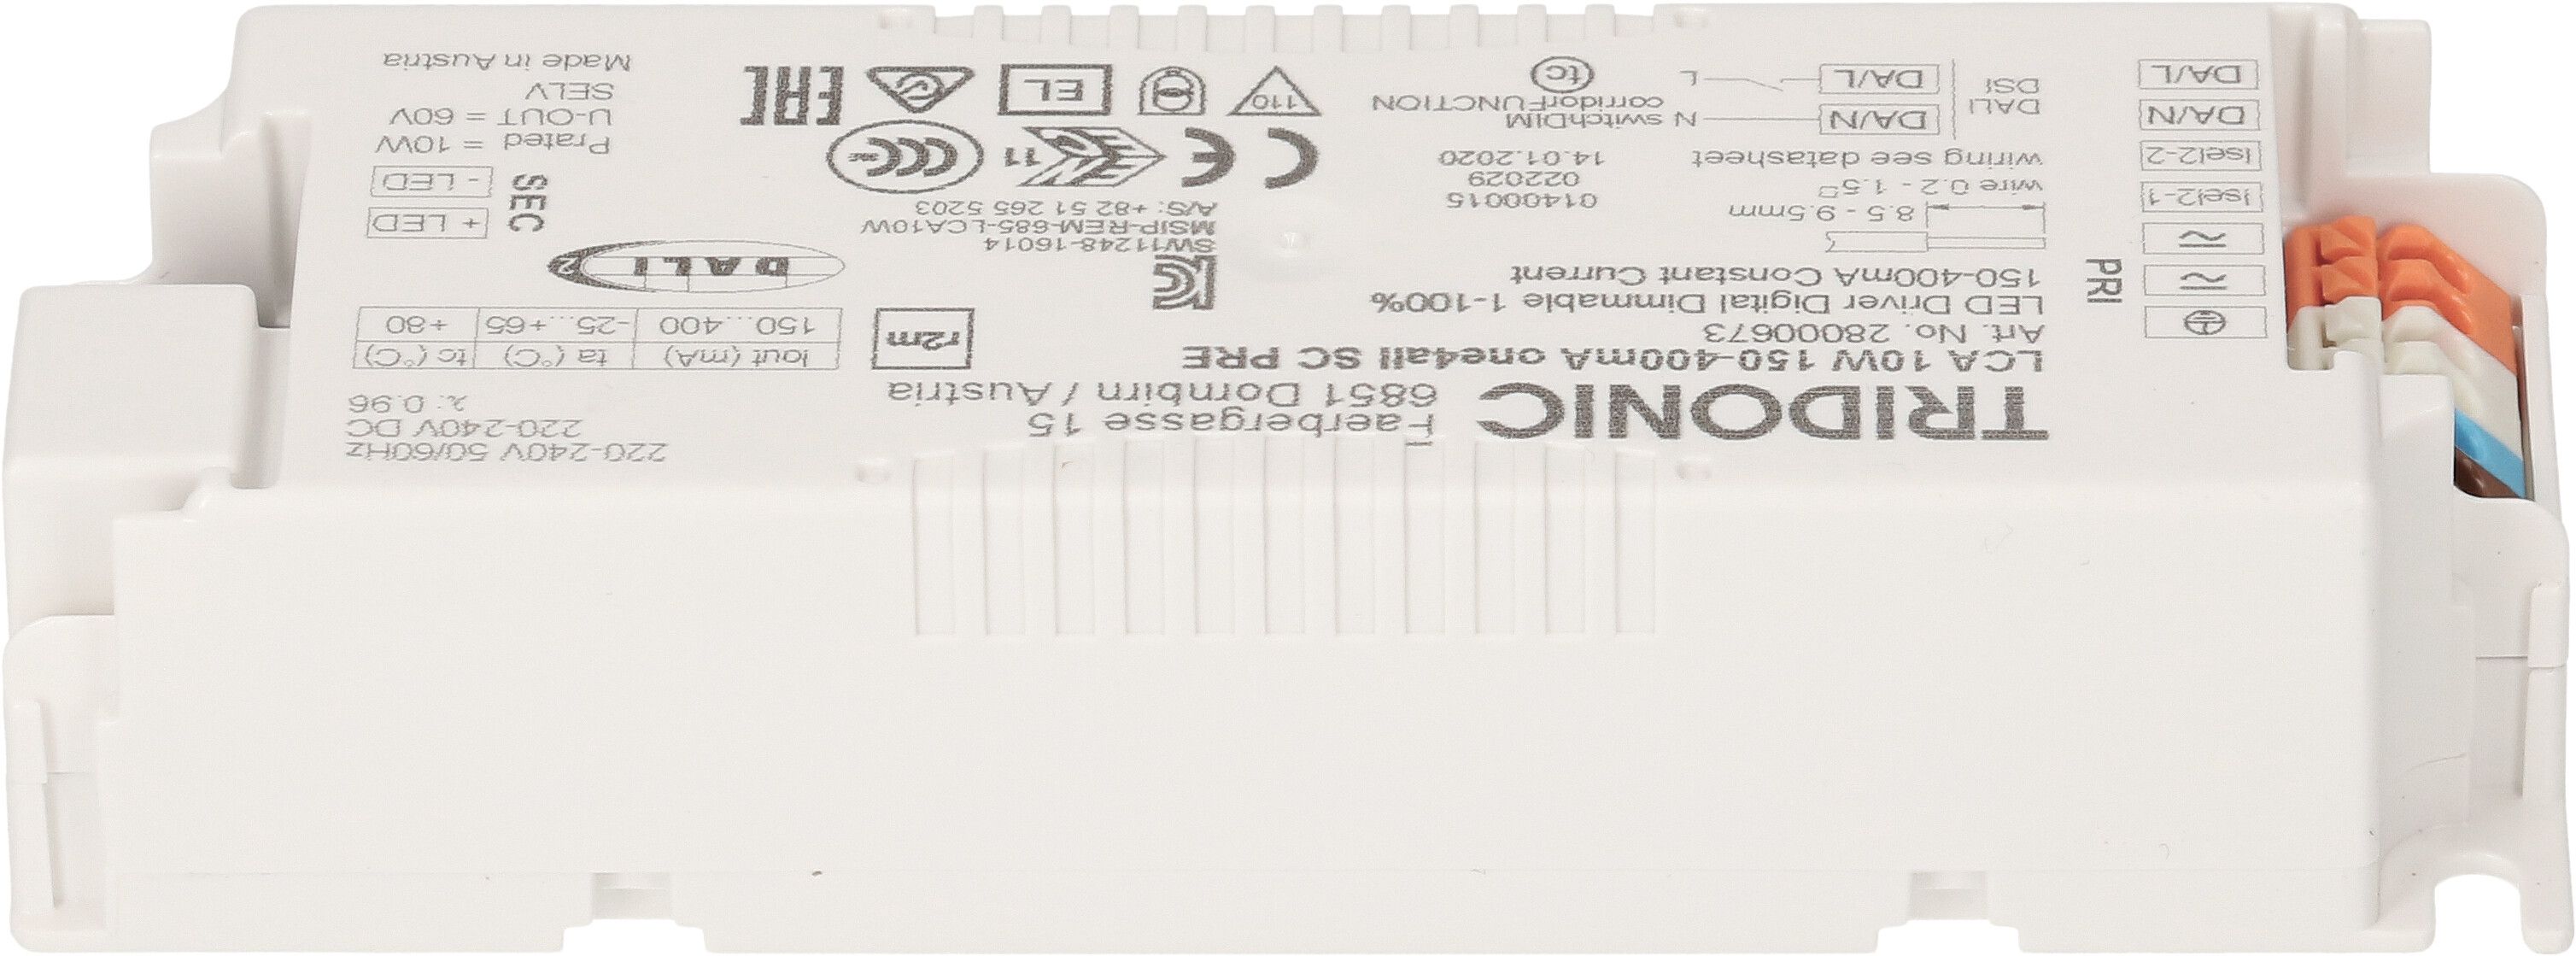 LED-Konstantstromtreiber DALI 150–400mA LCA one4all SC PRE